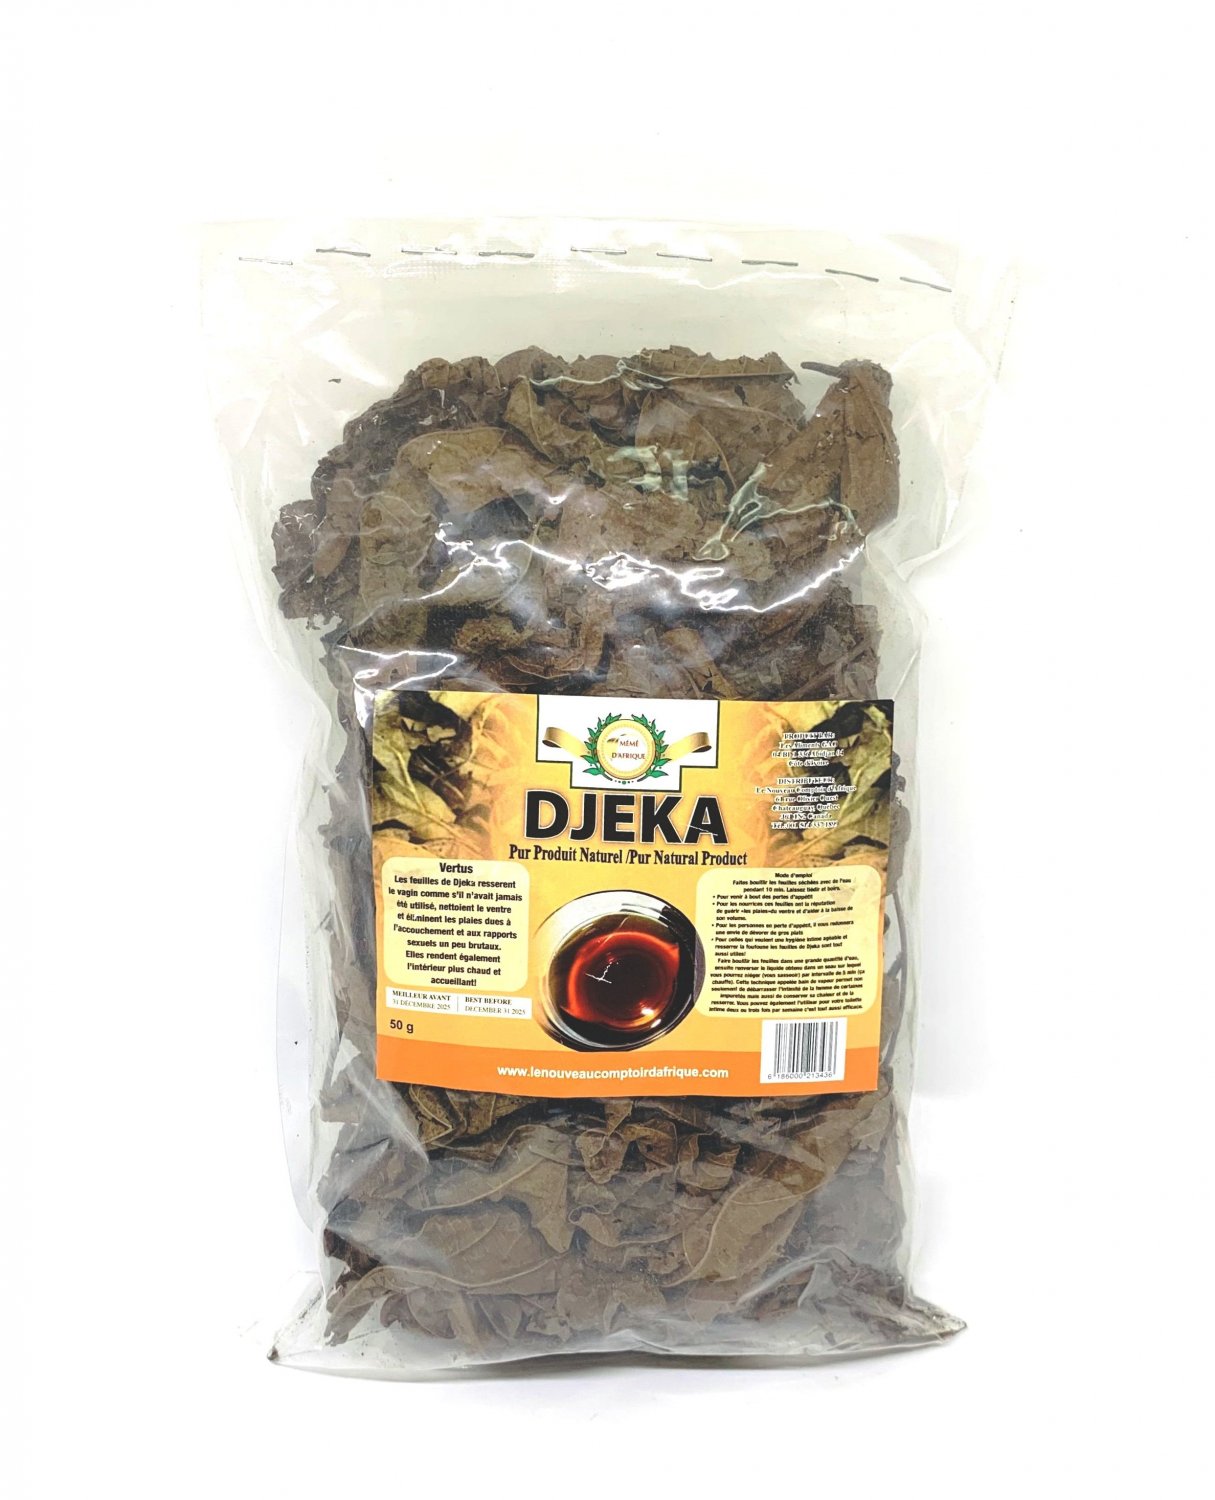 Sun dried djeka leaves 100% natural DJEKA Herbal tea 50g